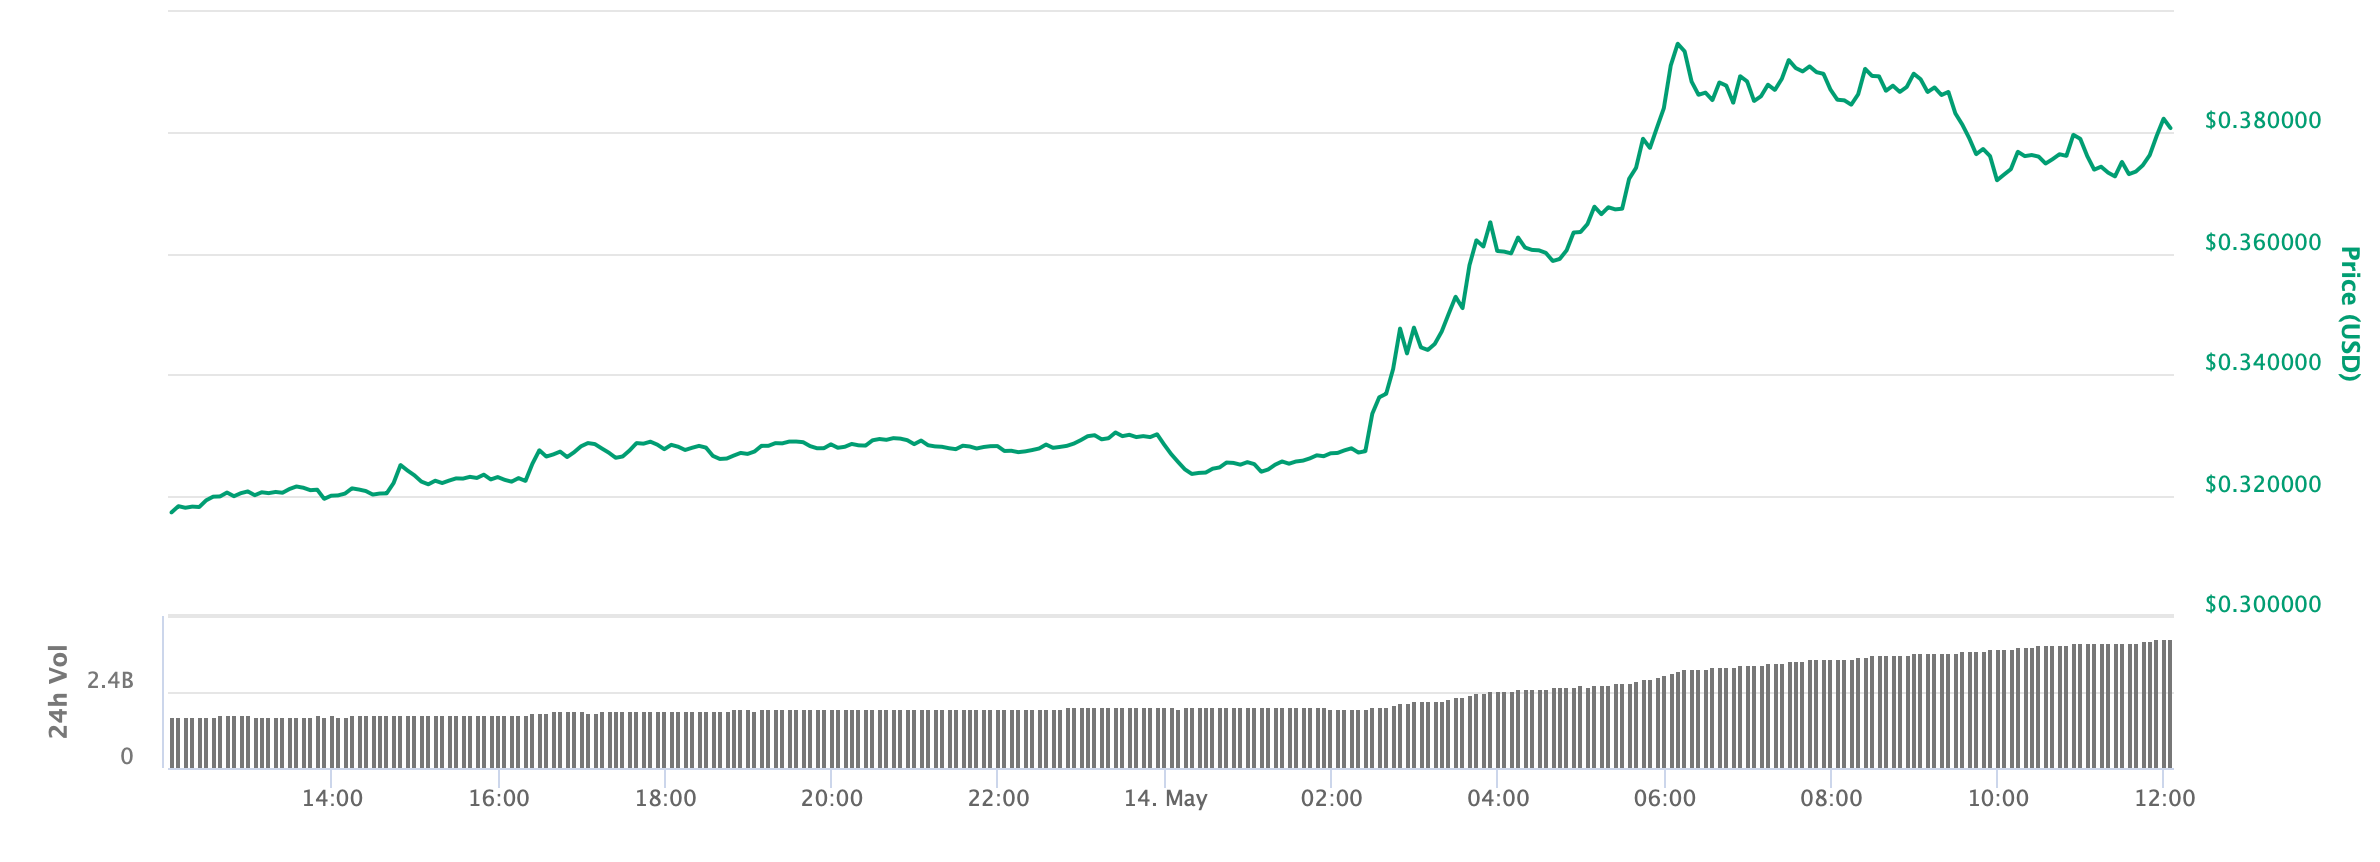 coinbase stock chart yahoo